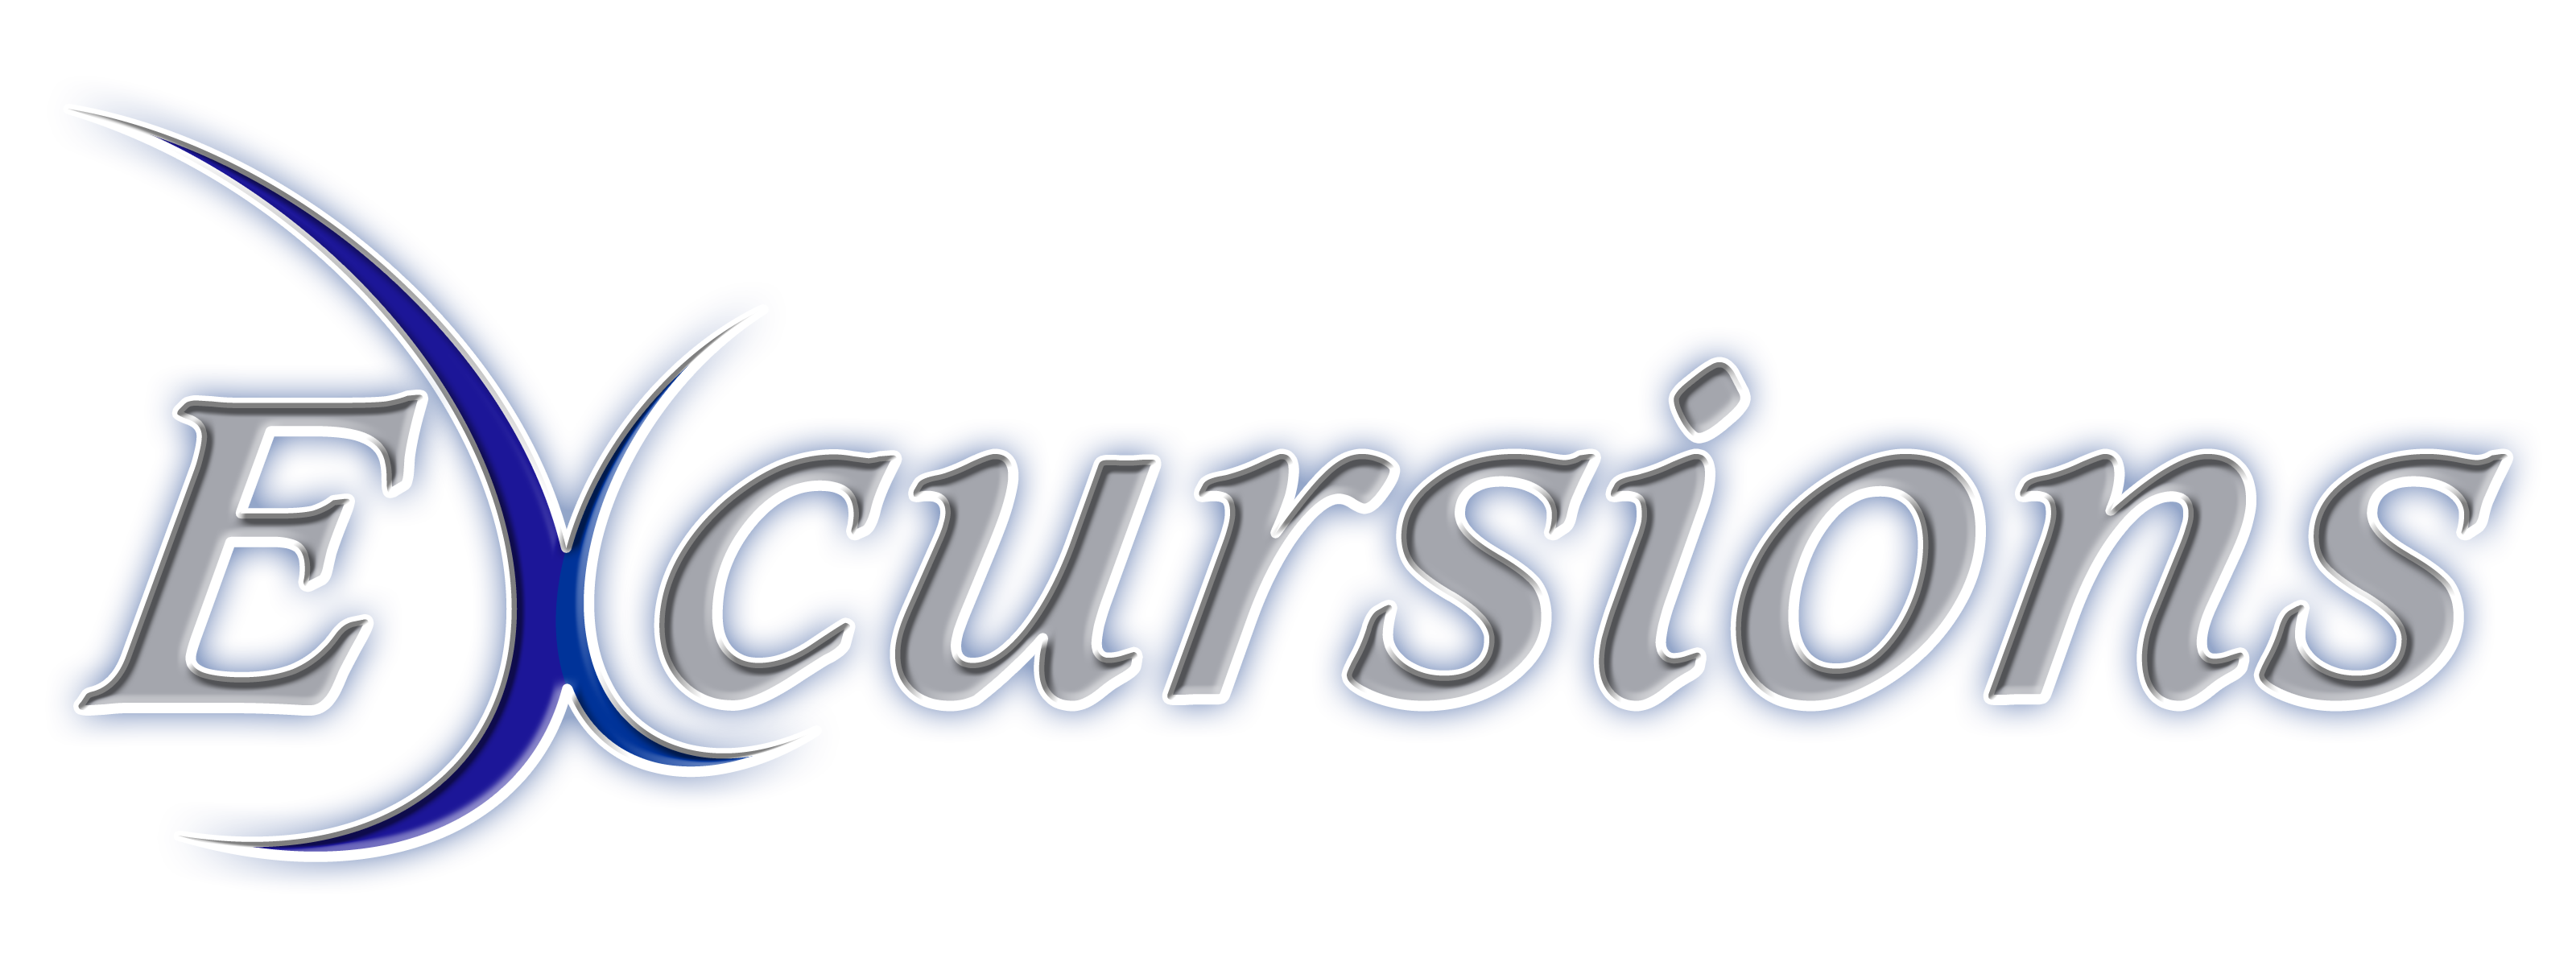 Excursions's Logo